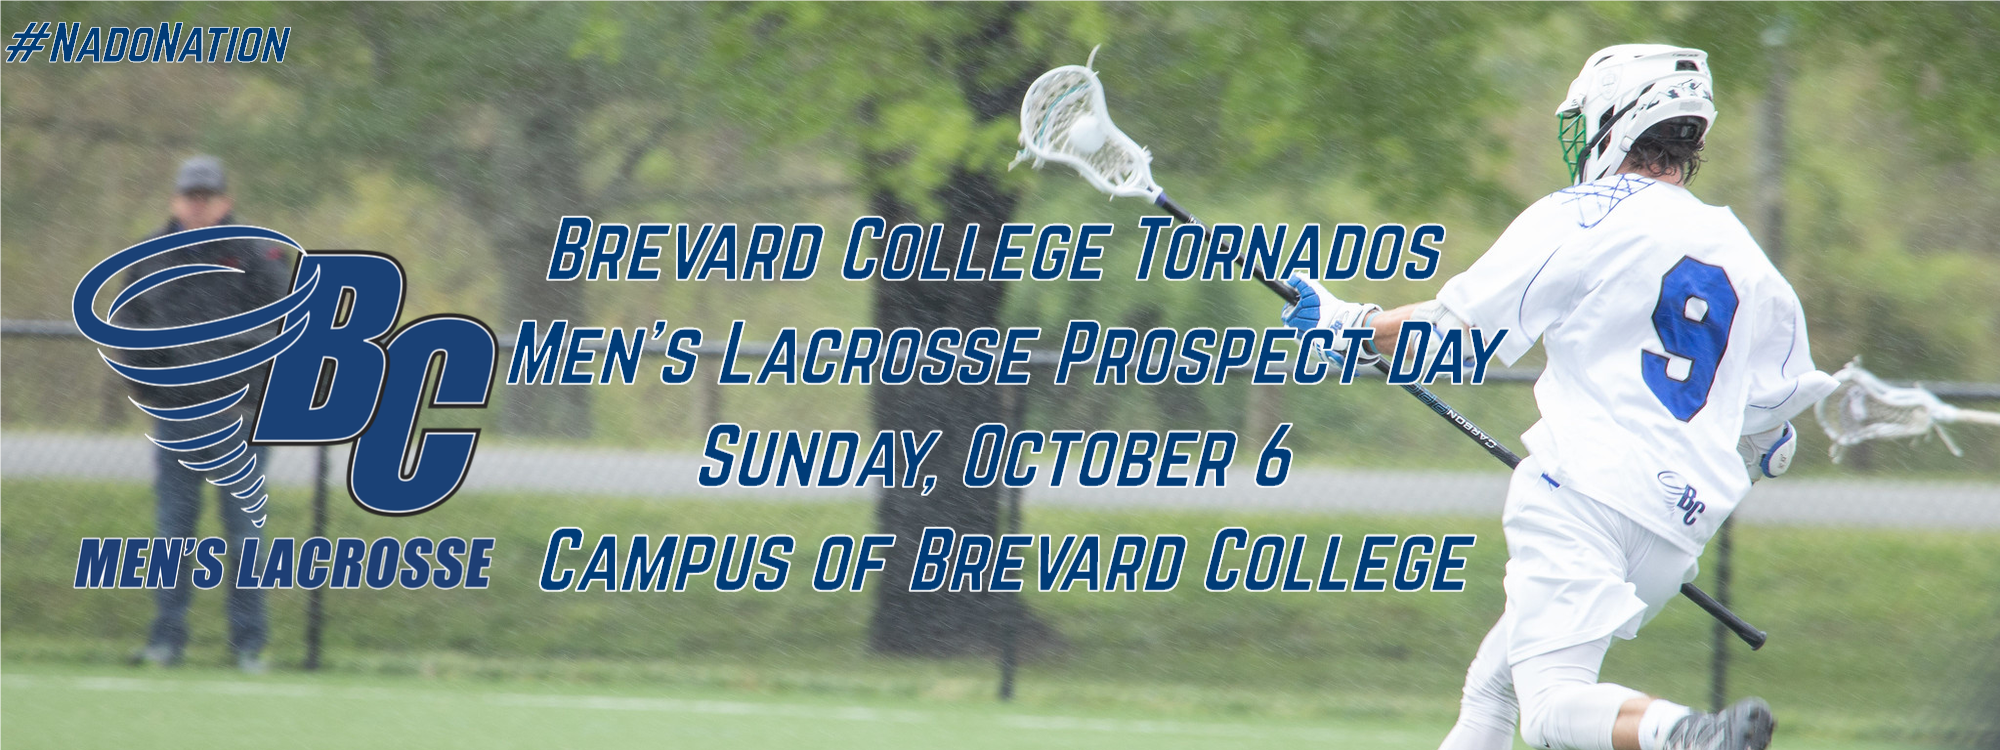 Brevard College Men’s Lacrosse to Host Prospect Day on Sunday, October 6